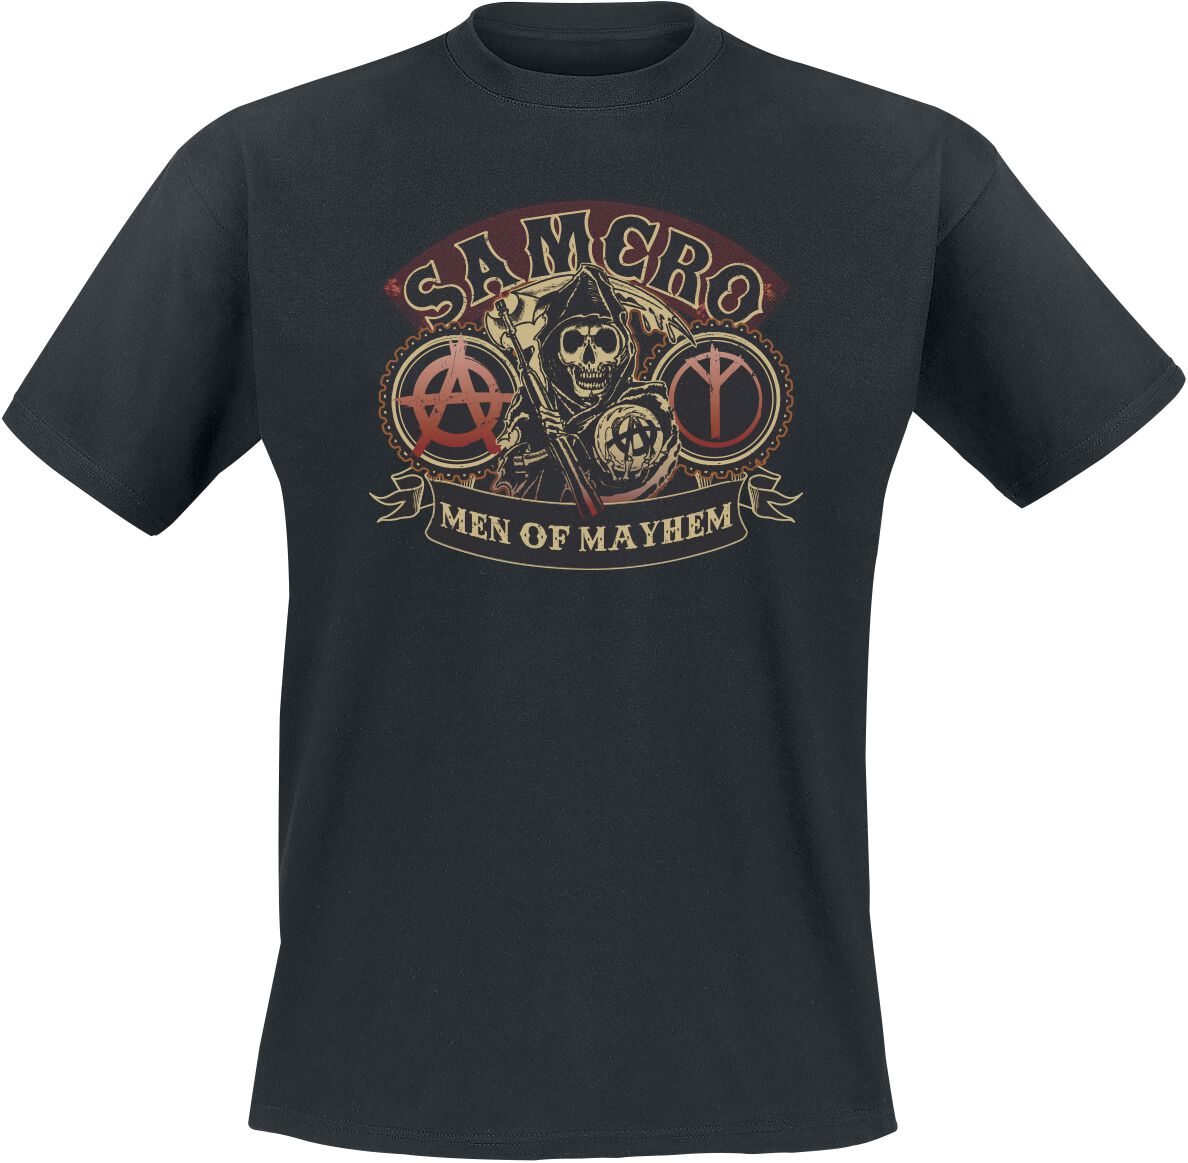 Sons Of Anarchy Men Of Mayhem T-Shirt black